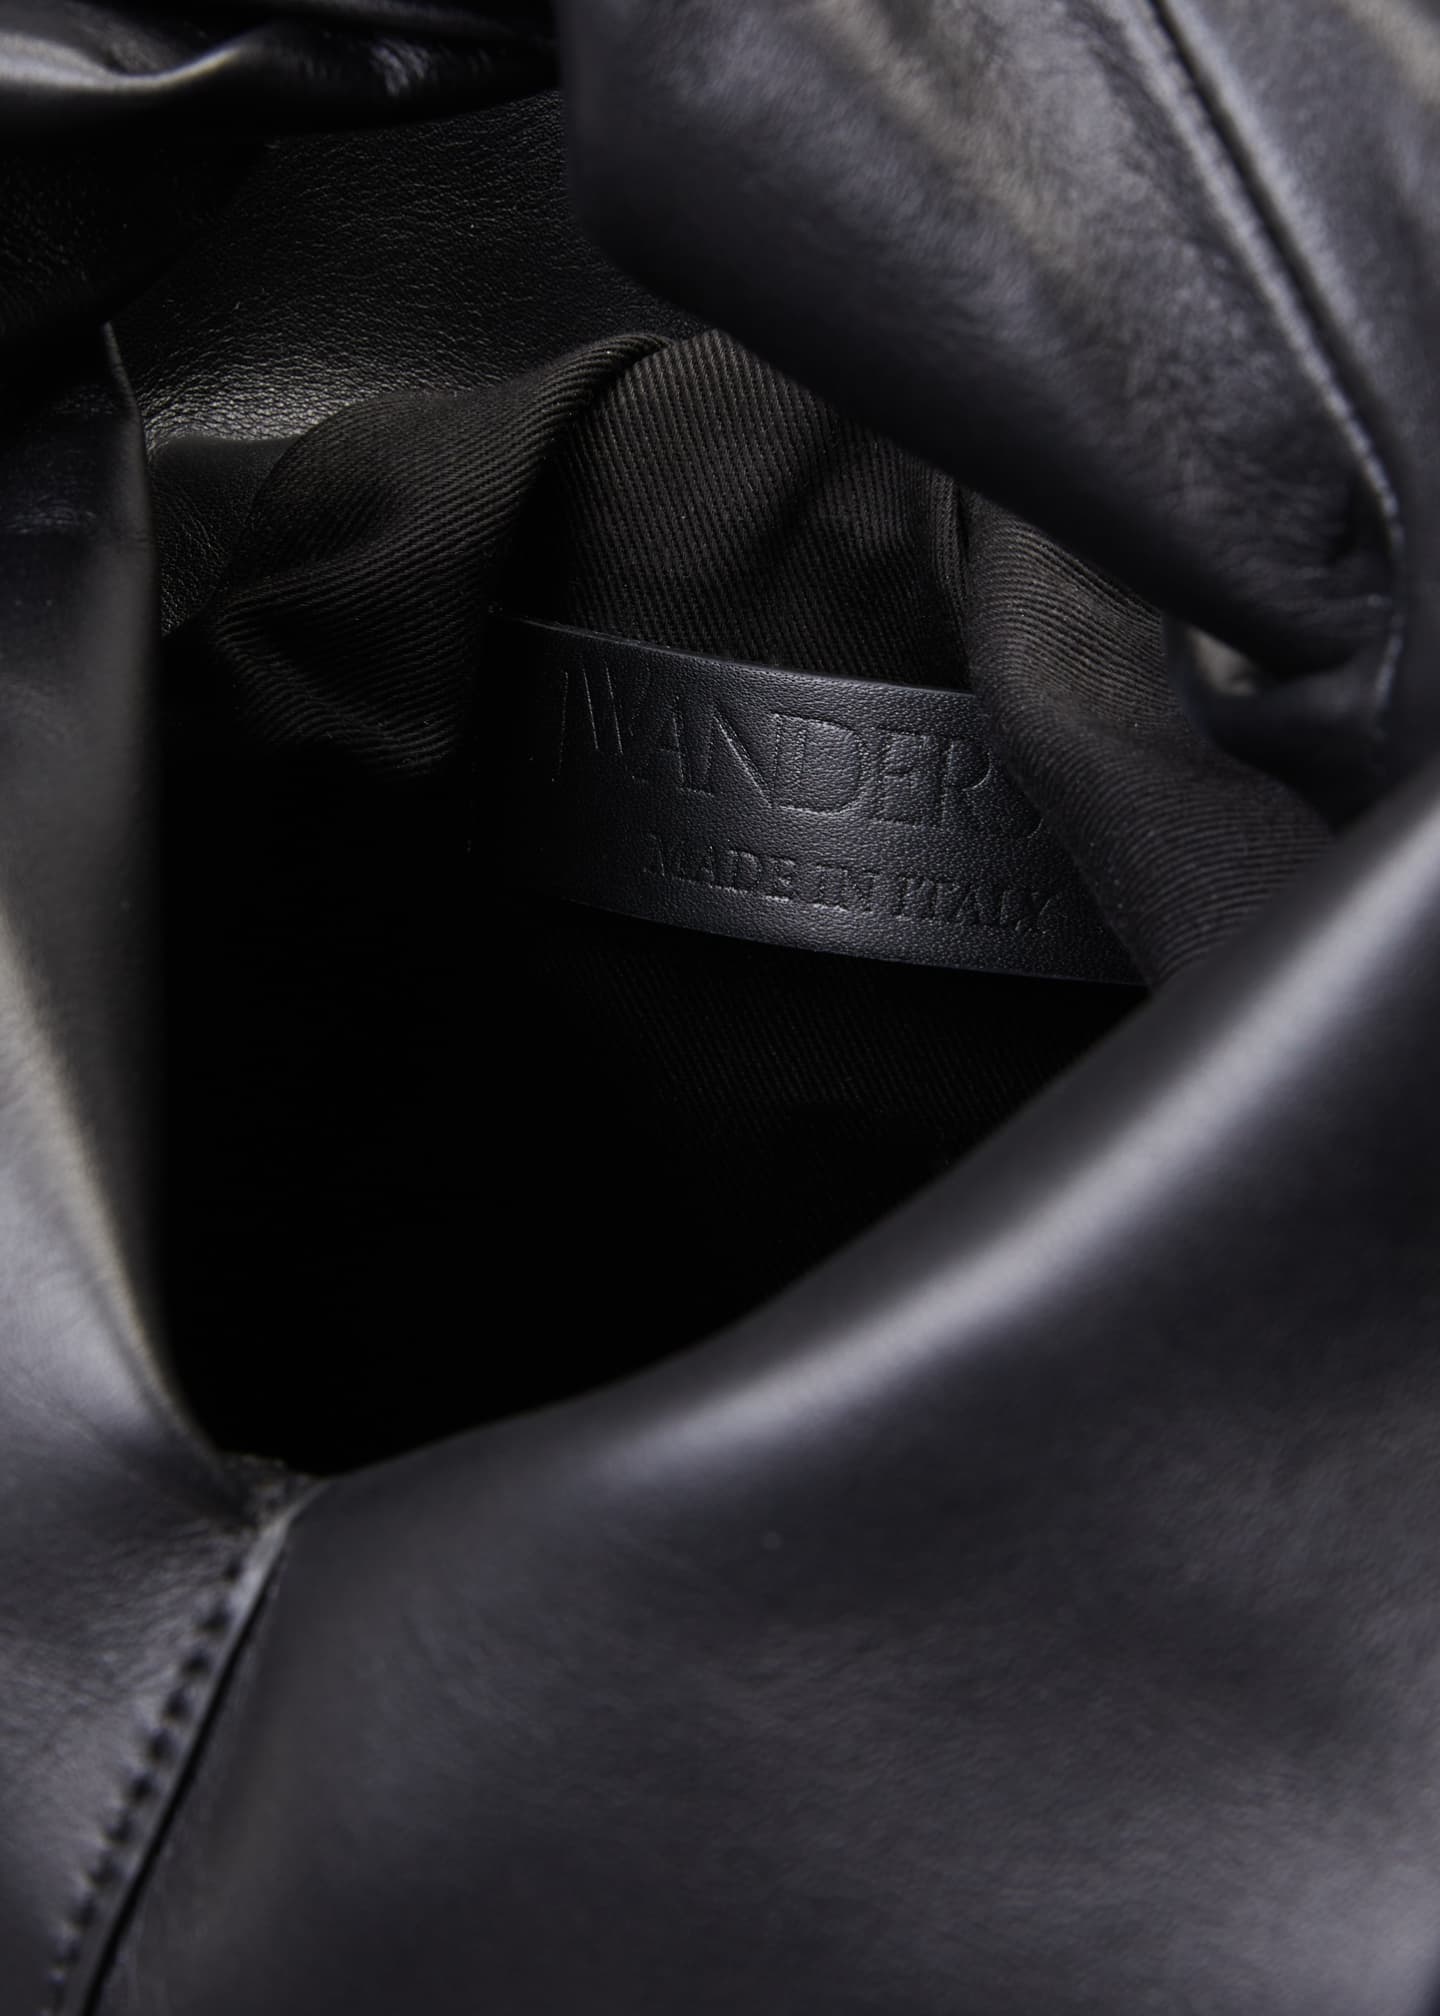 JW Anderson Mini Twisted Leather Top-Handle Bag - Bergdorf Goodman